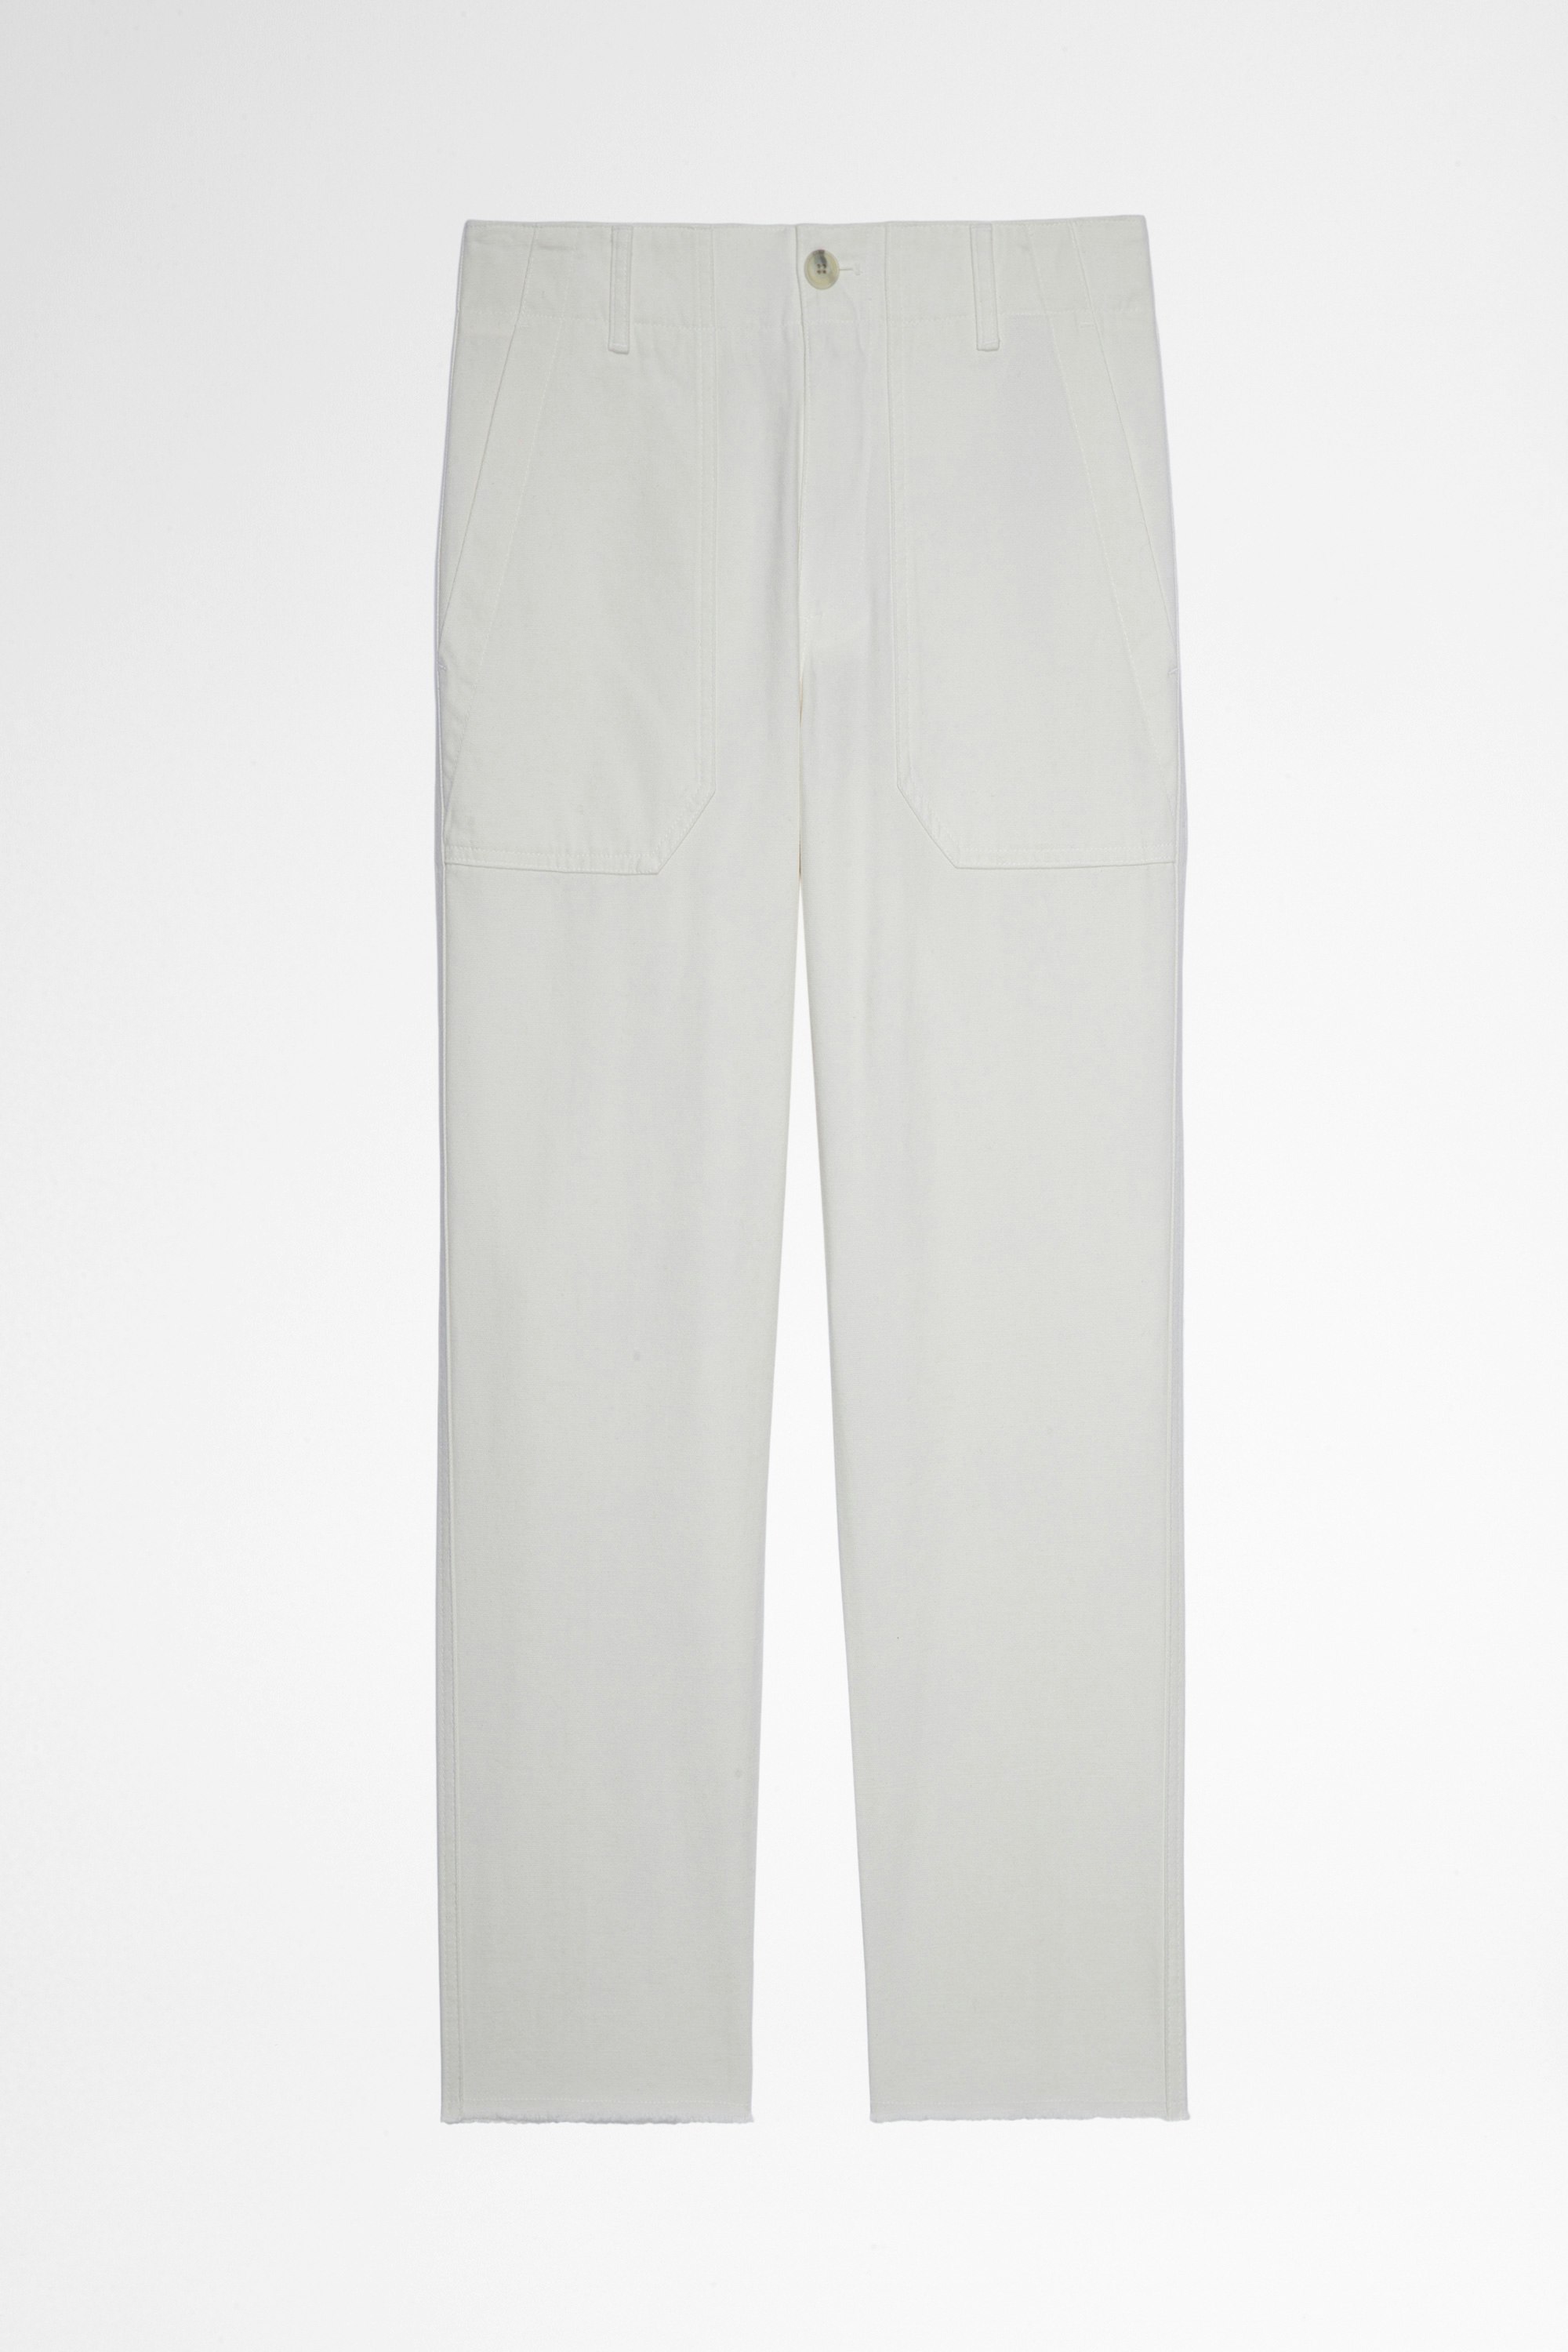 Pantaloni Projet Pantaloni 7/8 in cotone bianco donna